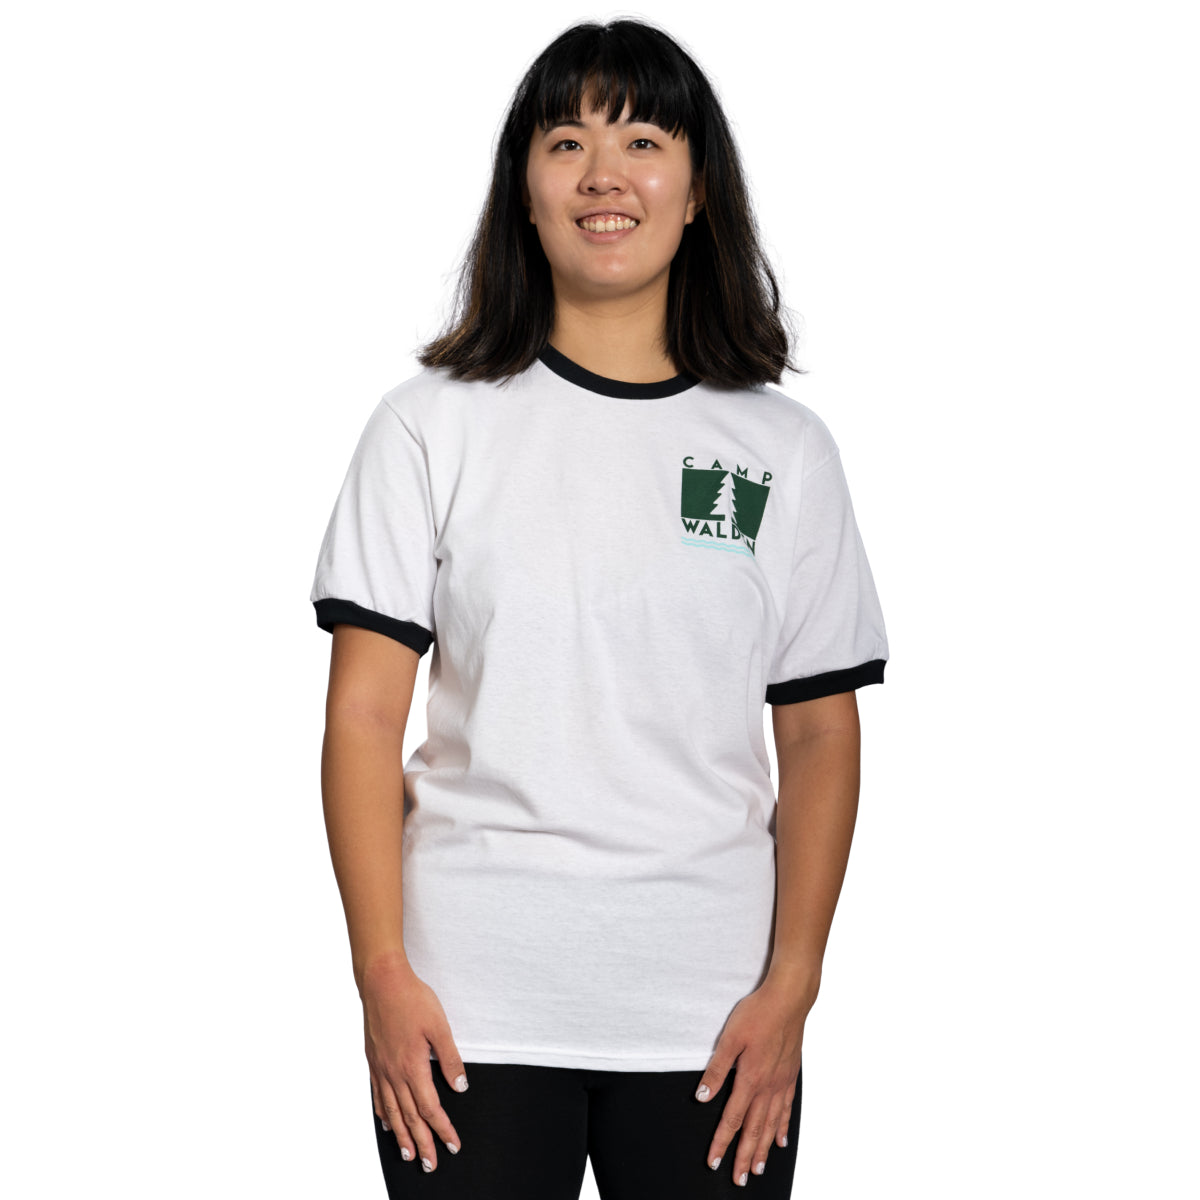 Camp Walden Parent Trap Movie Unisex Costume T-Shirt4 Women